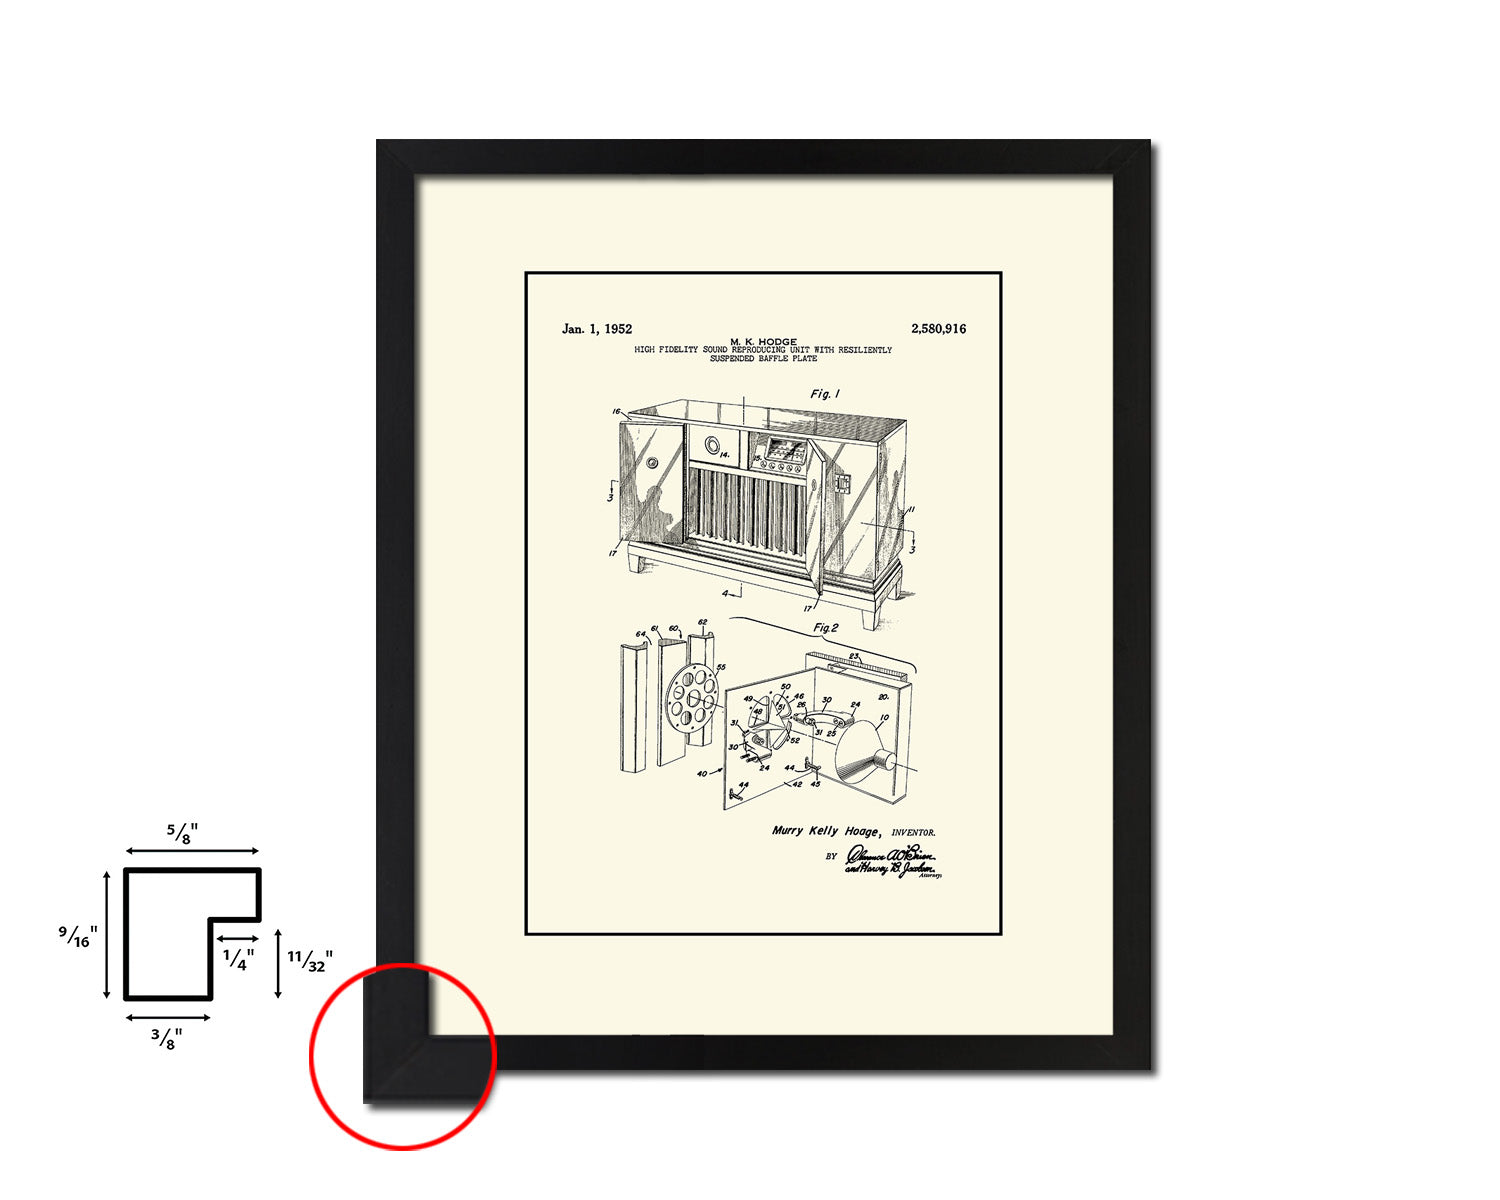 High Fidelity Unit Baffle Plate Sound Patent Artwork Black Frame Print Gifts